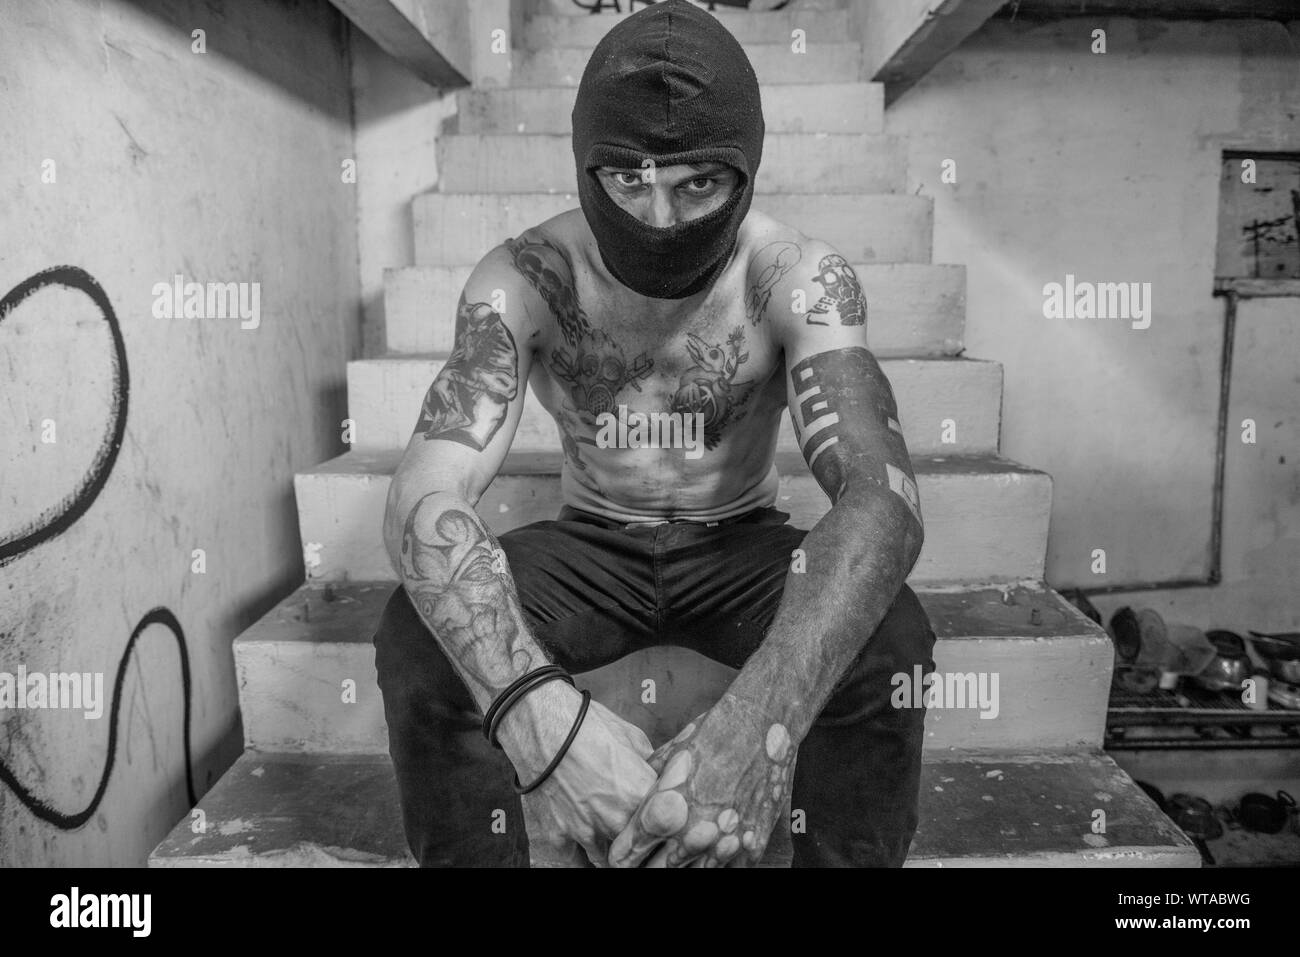 Tattoo American Man Arm Immagini e Fotos Stock - Alamy